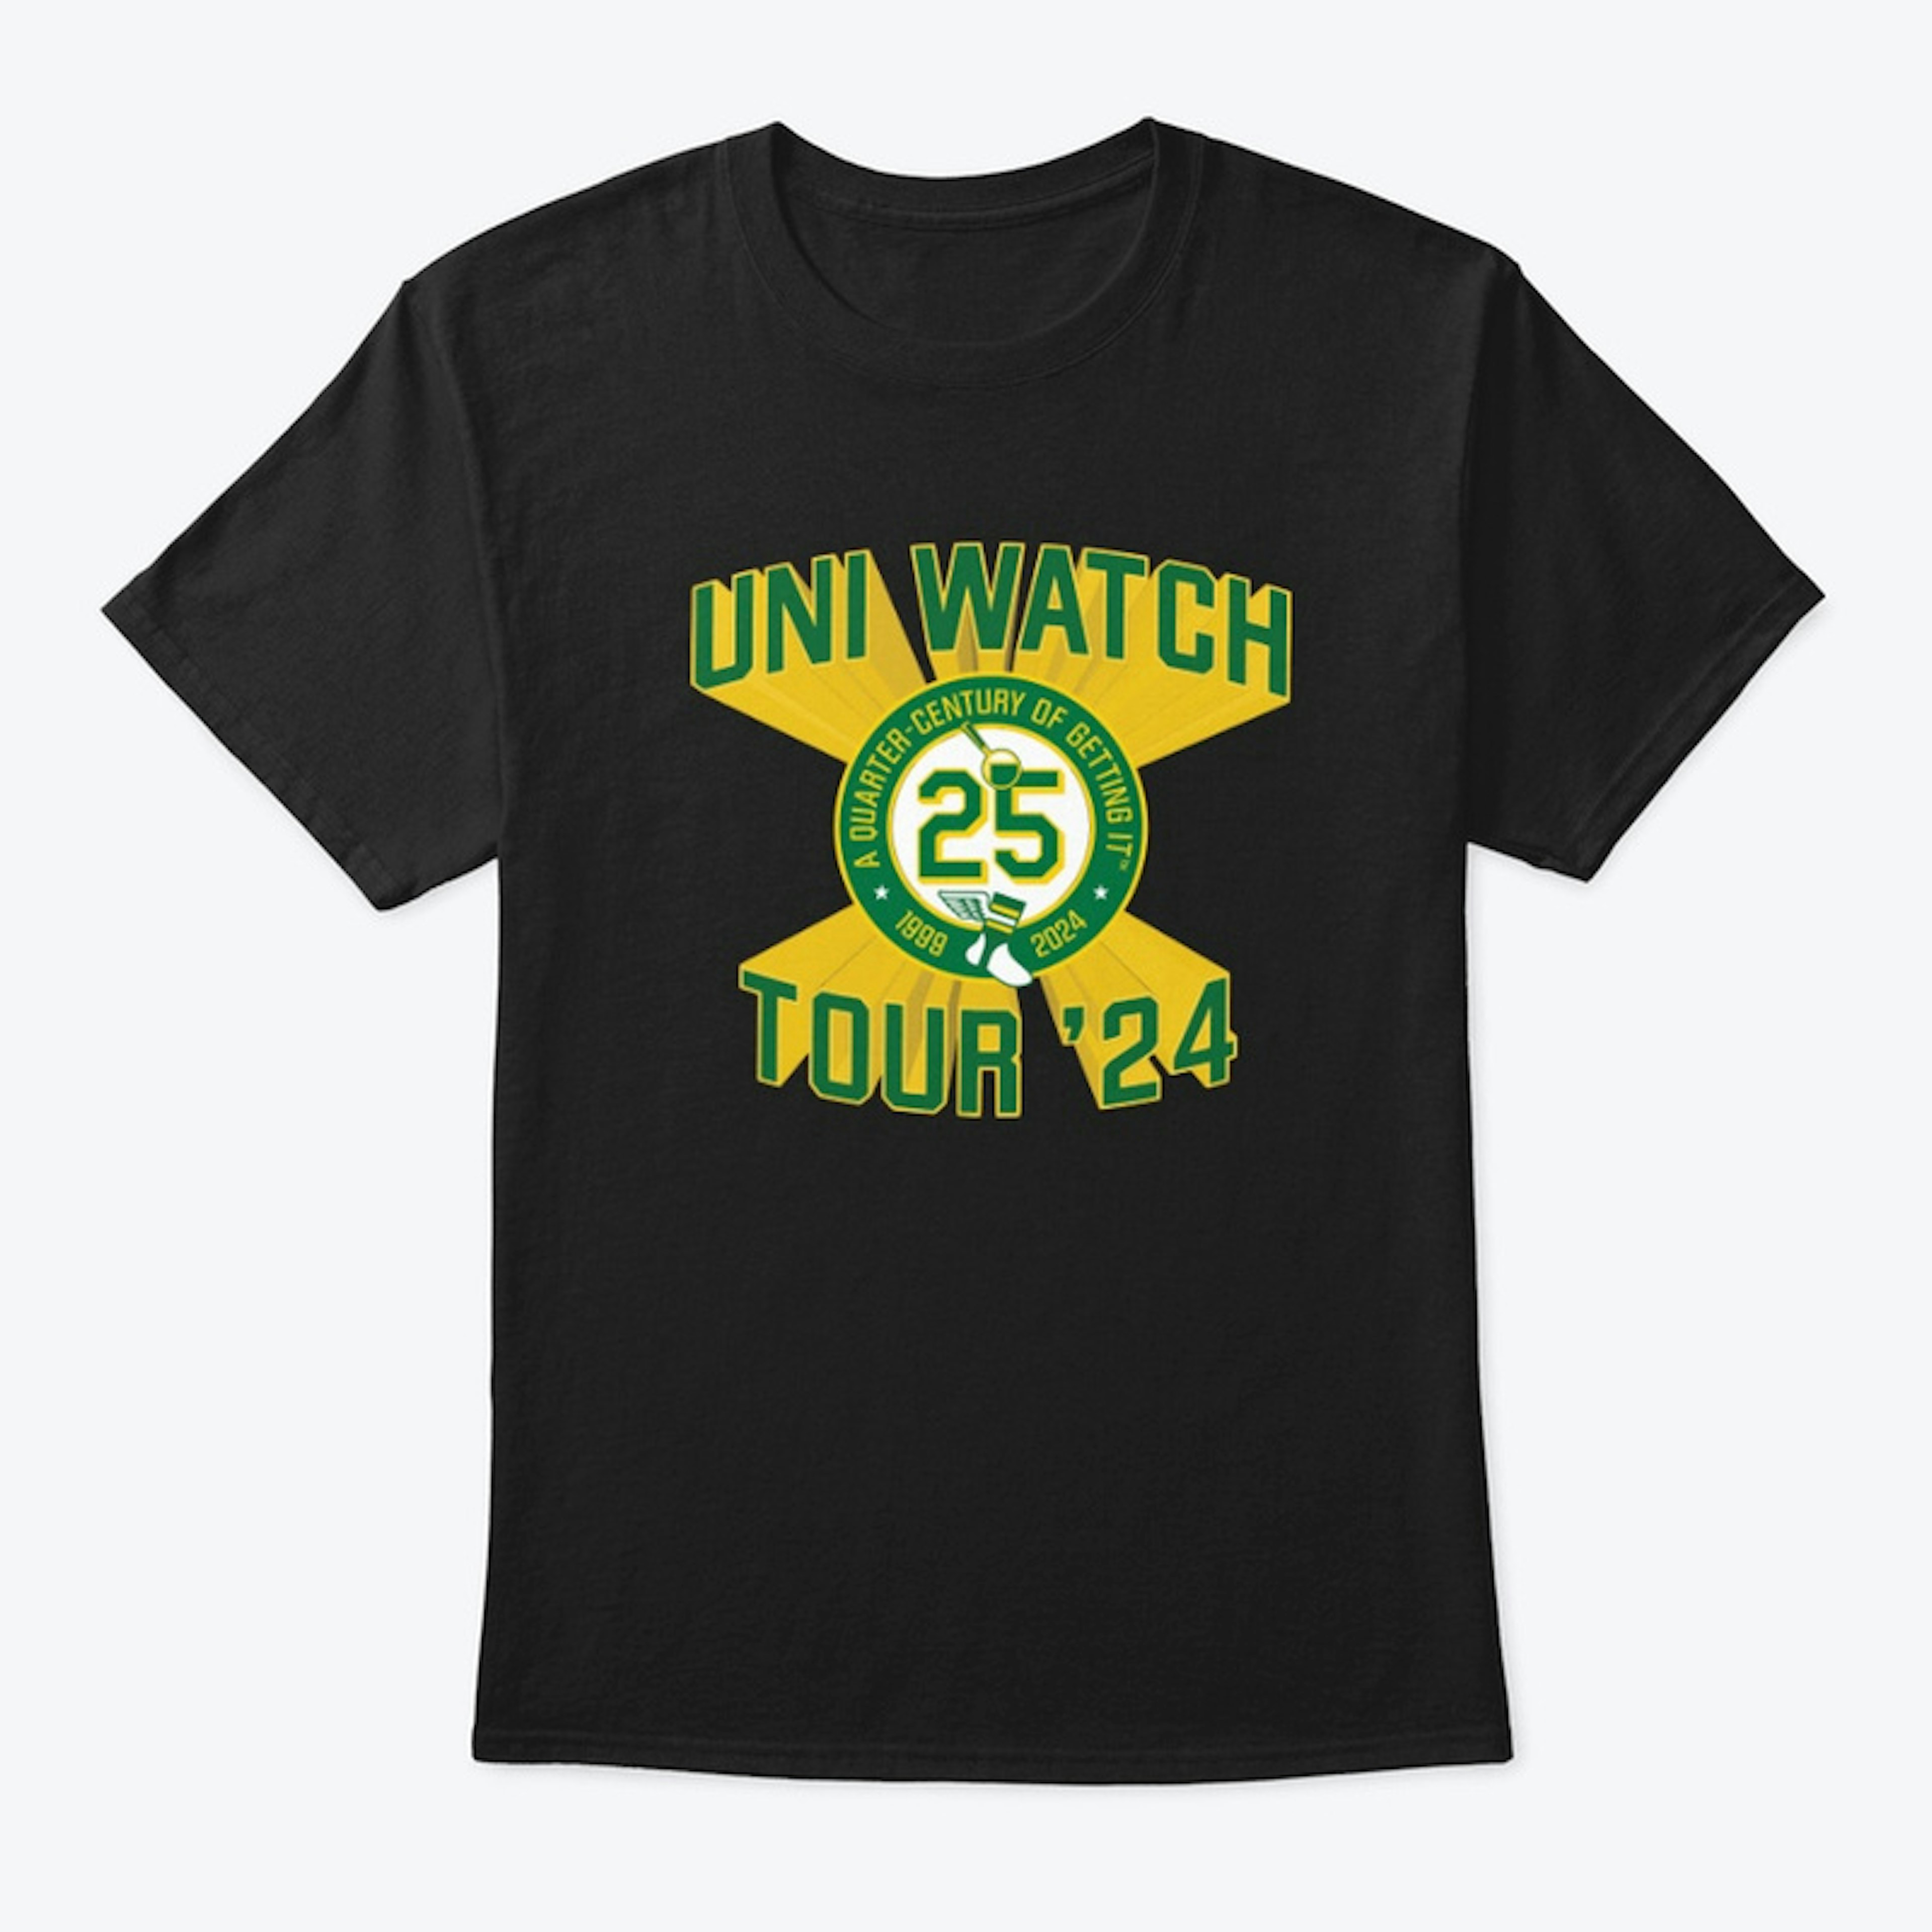 Uni Watch Tour ’24 T-Shirt (black)